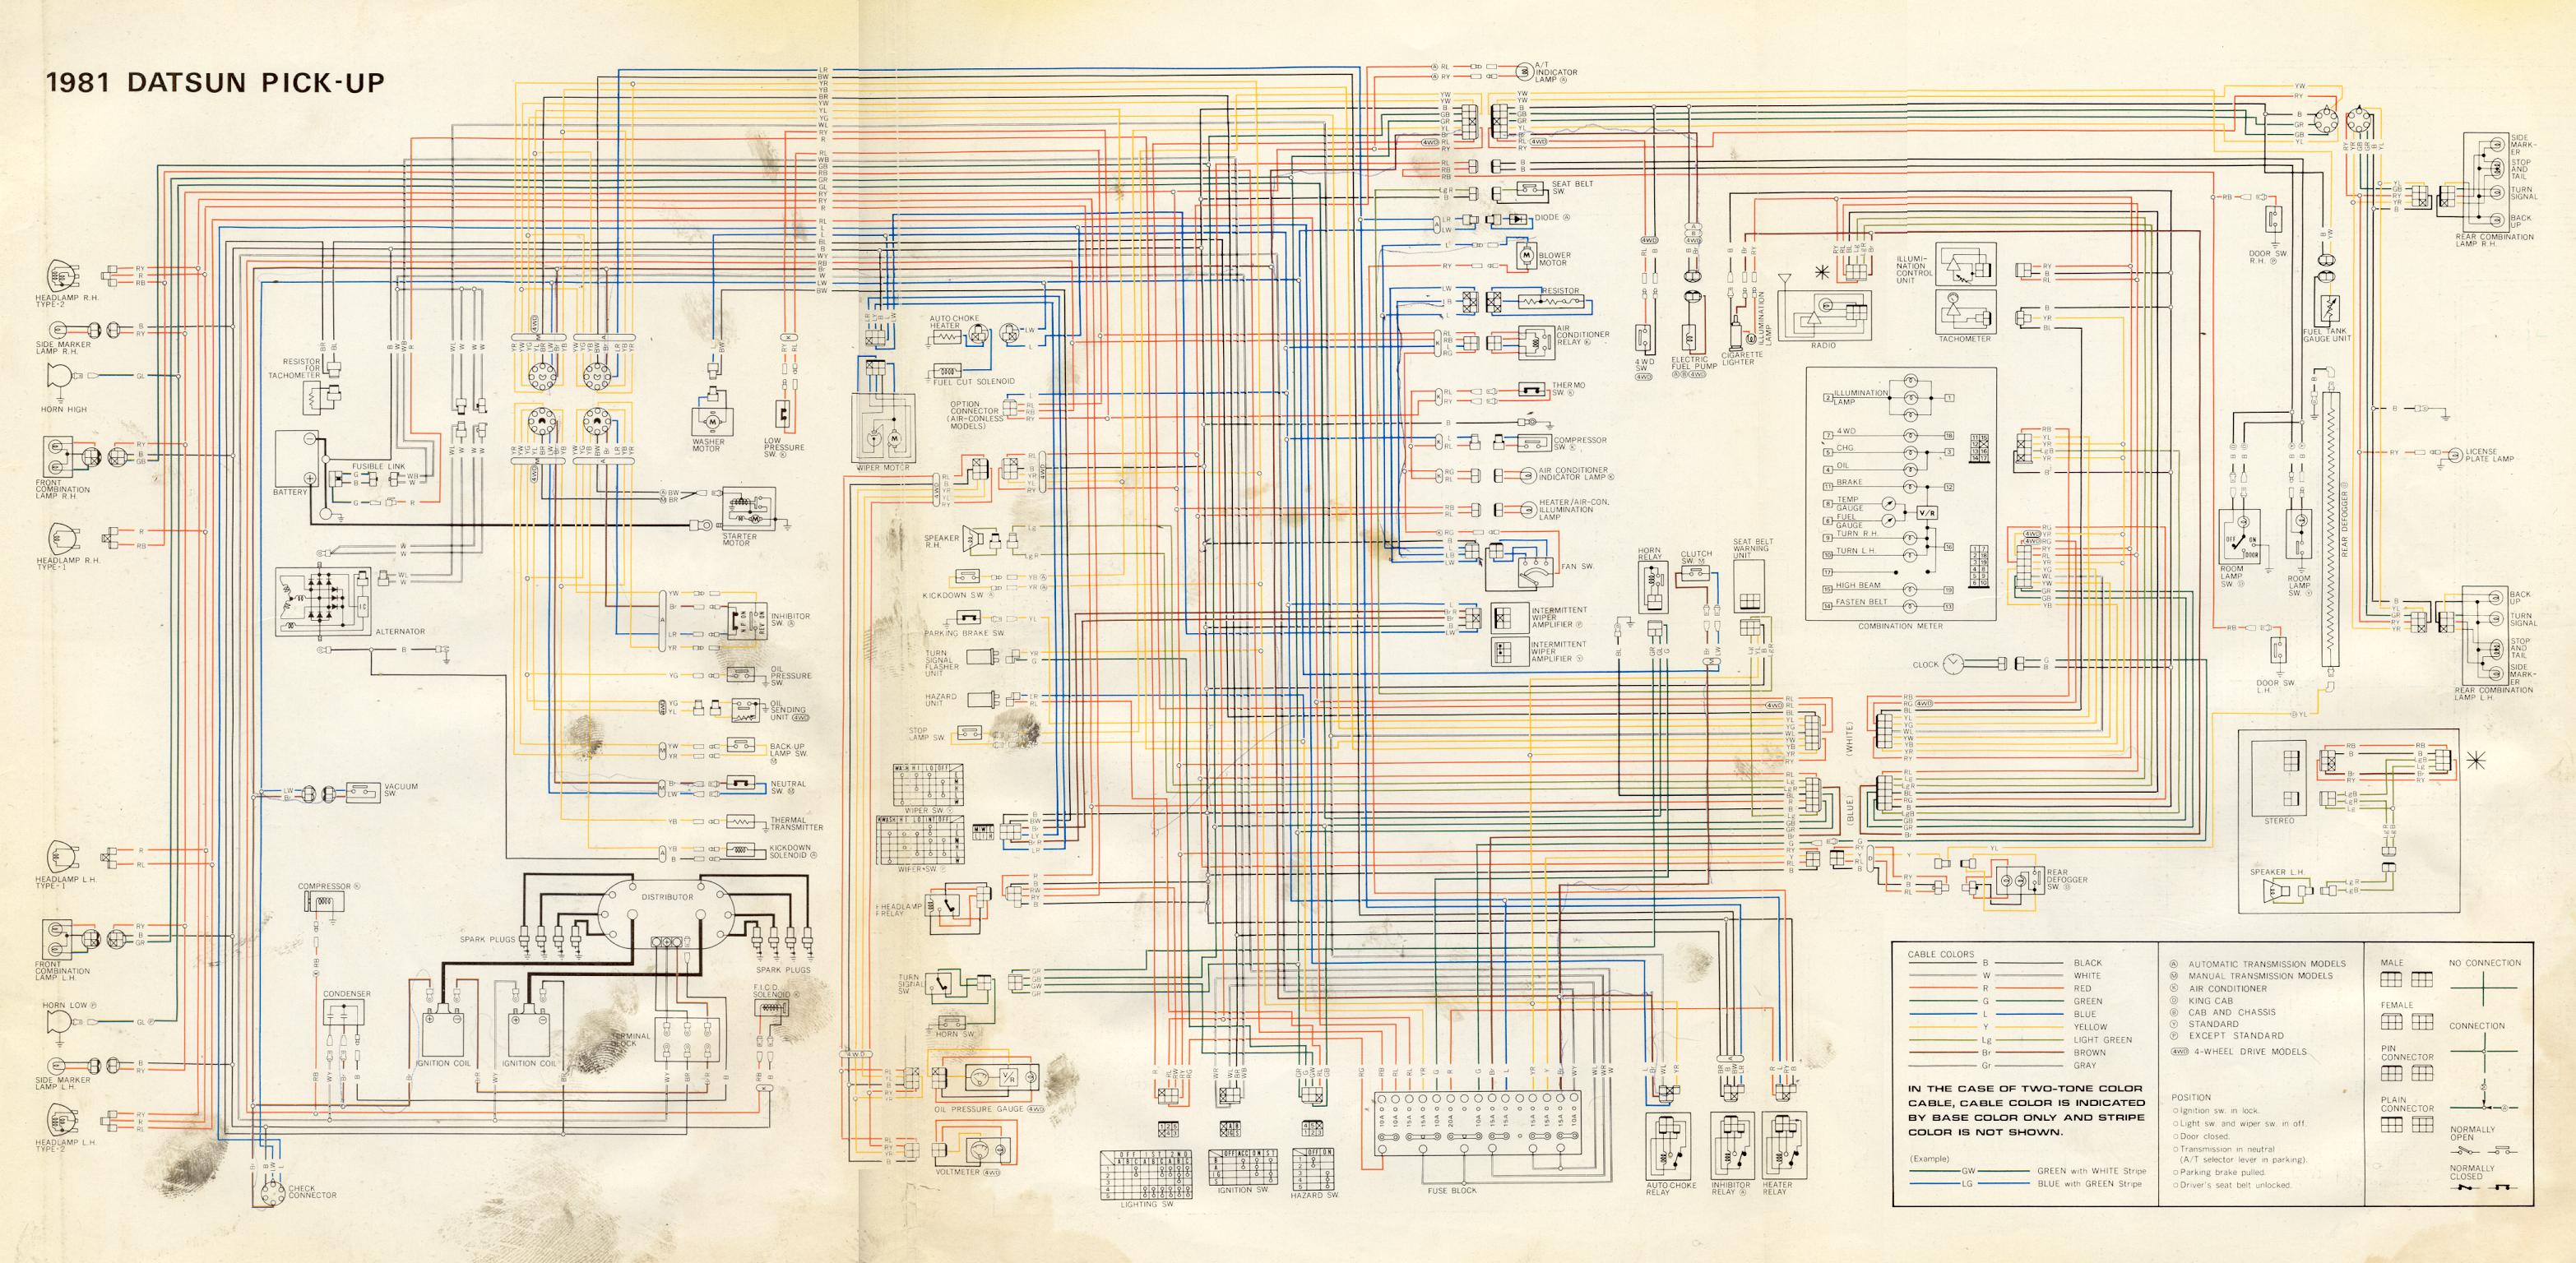 1965 datsun 311 wiring diagram